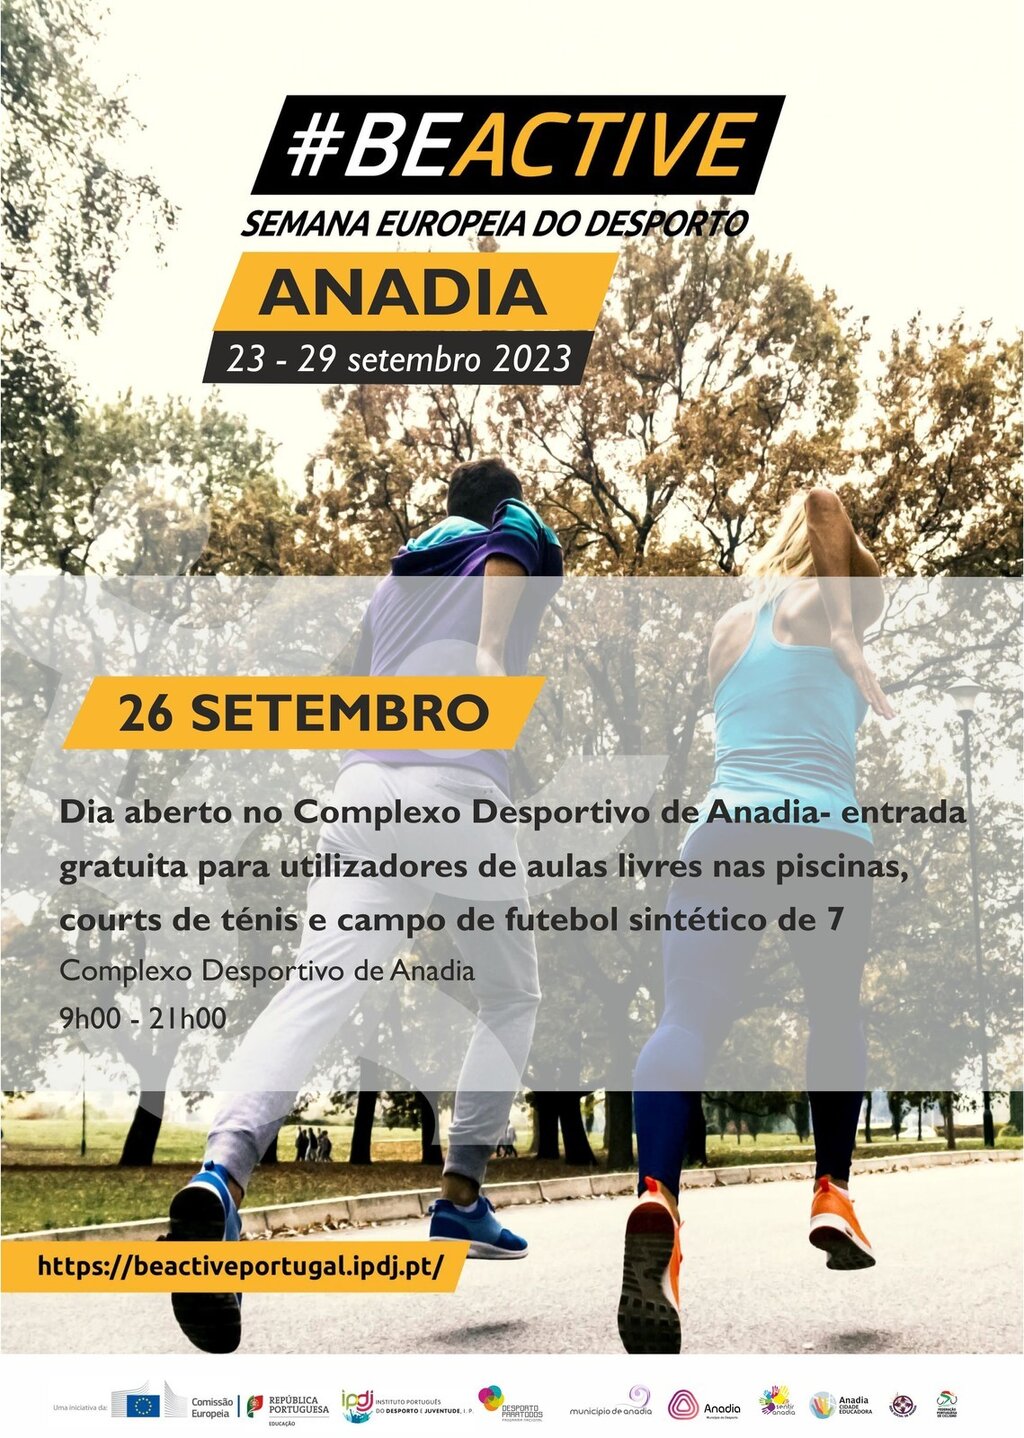 Semana do Desporto - Dia aberto no Complexo Desportivo de Anadia